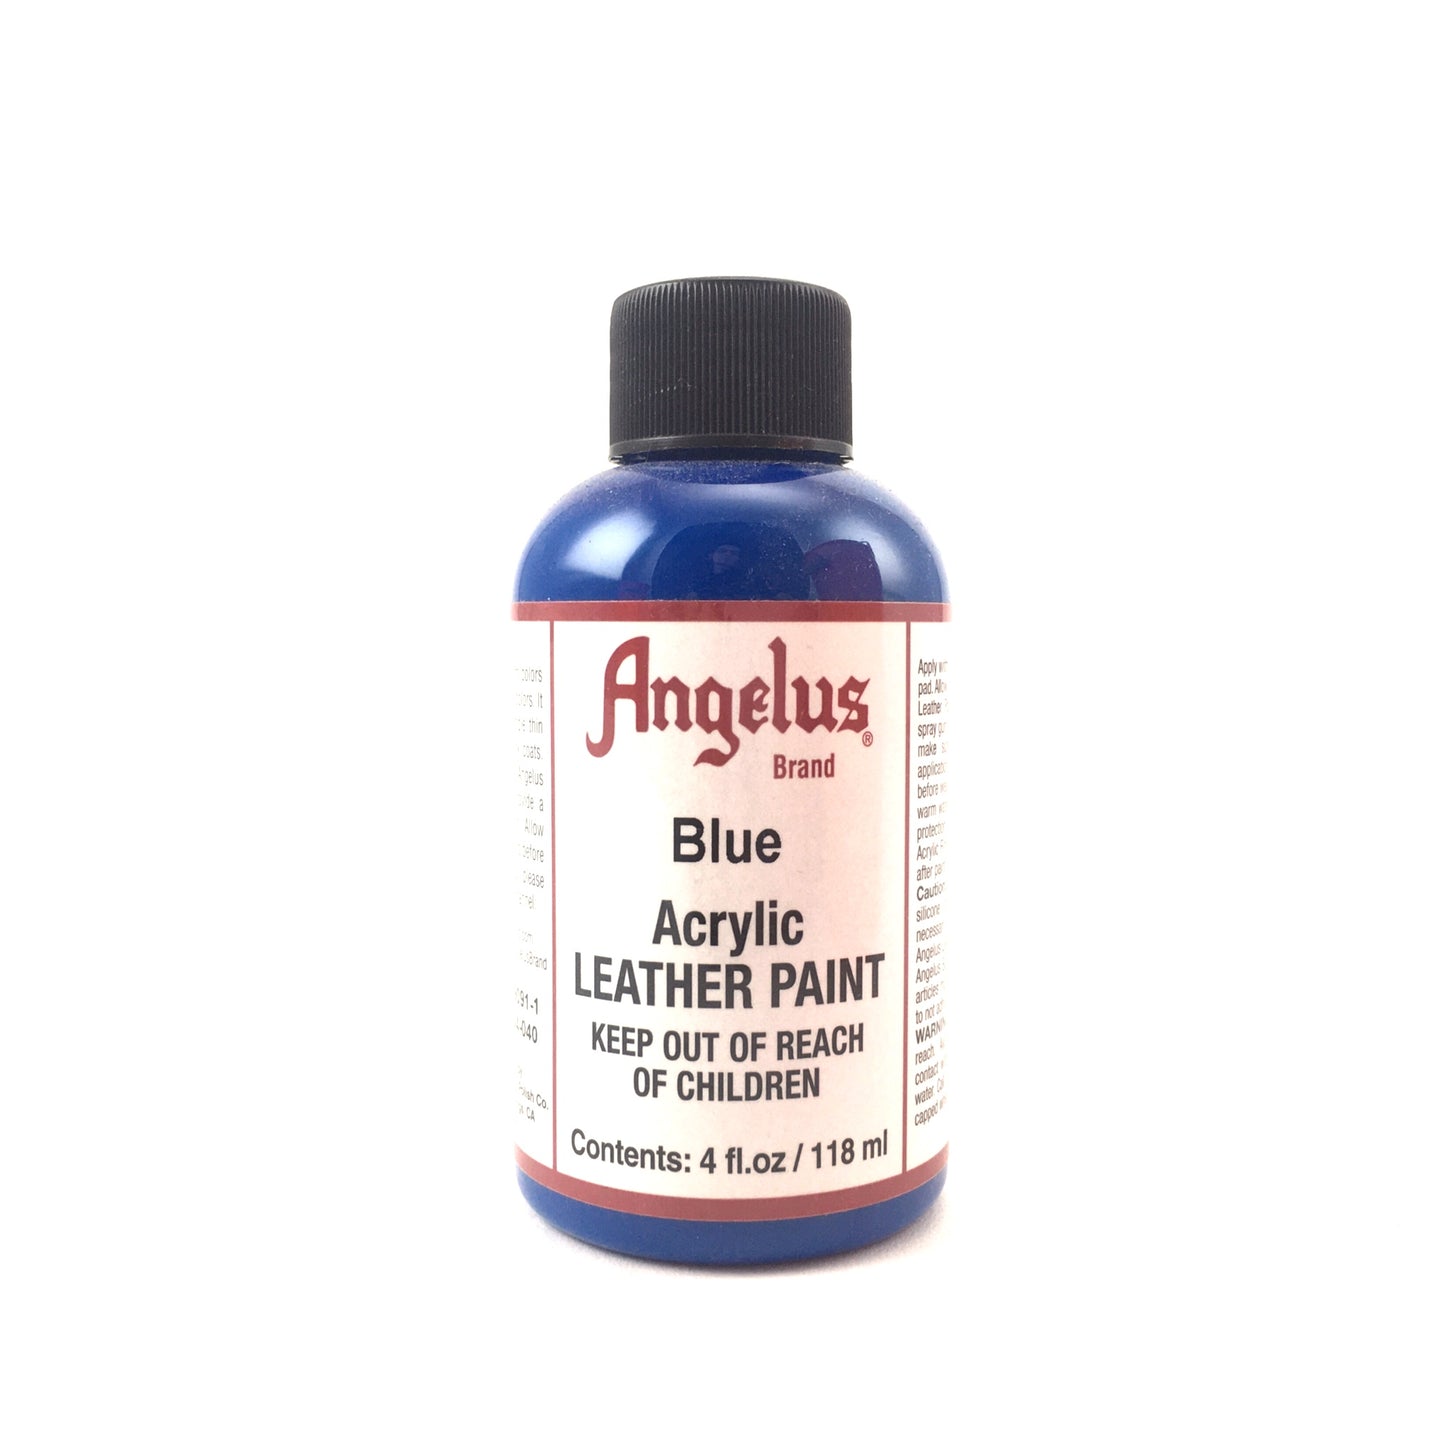 Angelus Acrylic Leather Paint - 4 oz. - Matte Blue by Angelus - K. A. Artist Shop